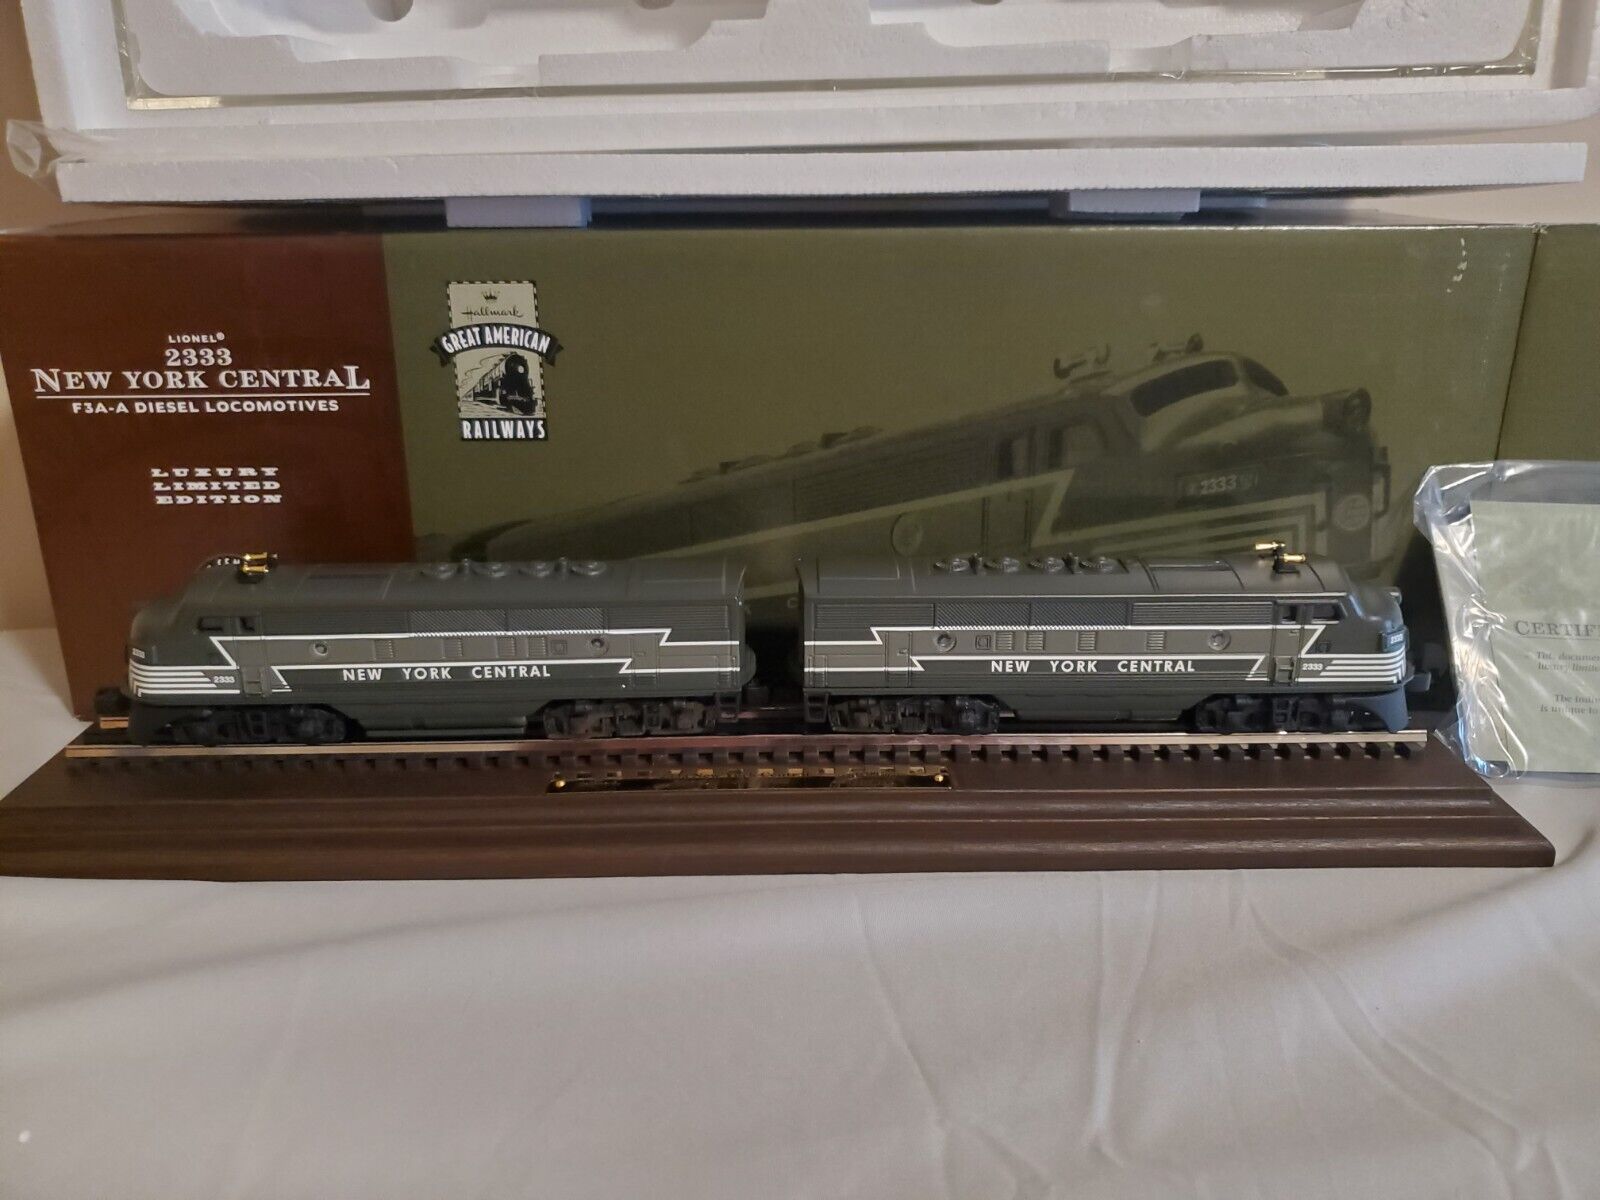 Hallmark Lionel 2333 New York Central F3A-A Diesal Locomotive HO Scale. NEW